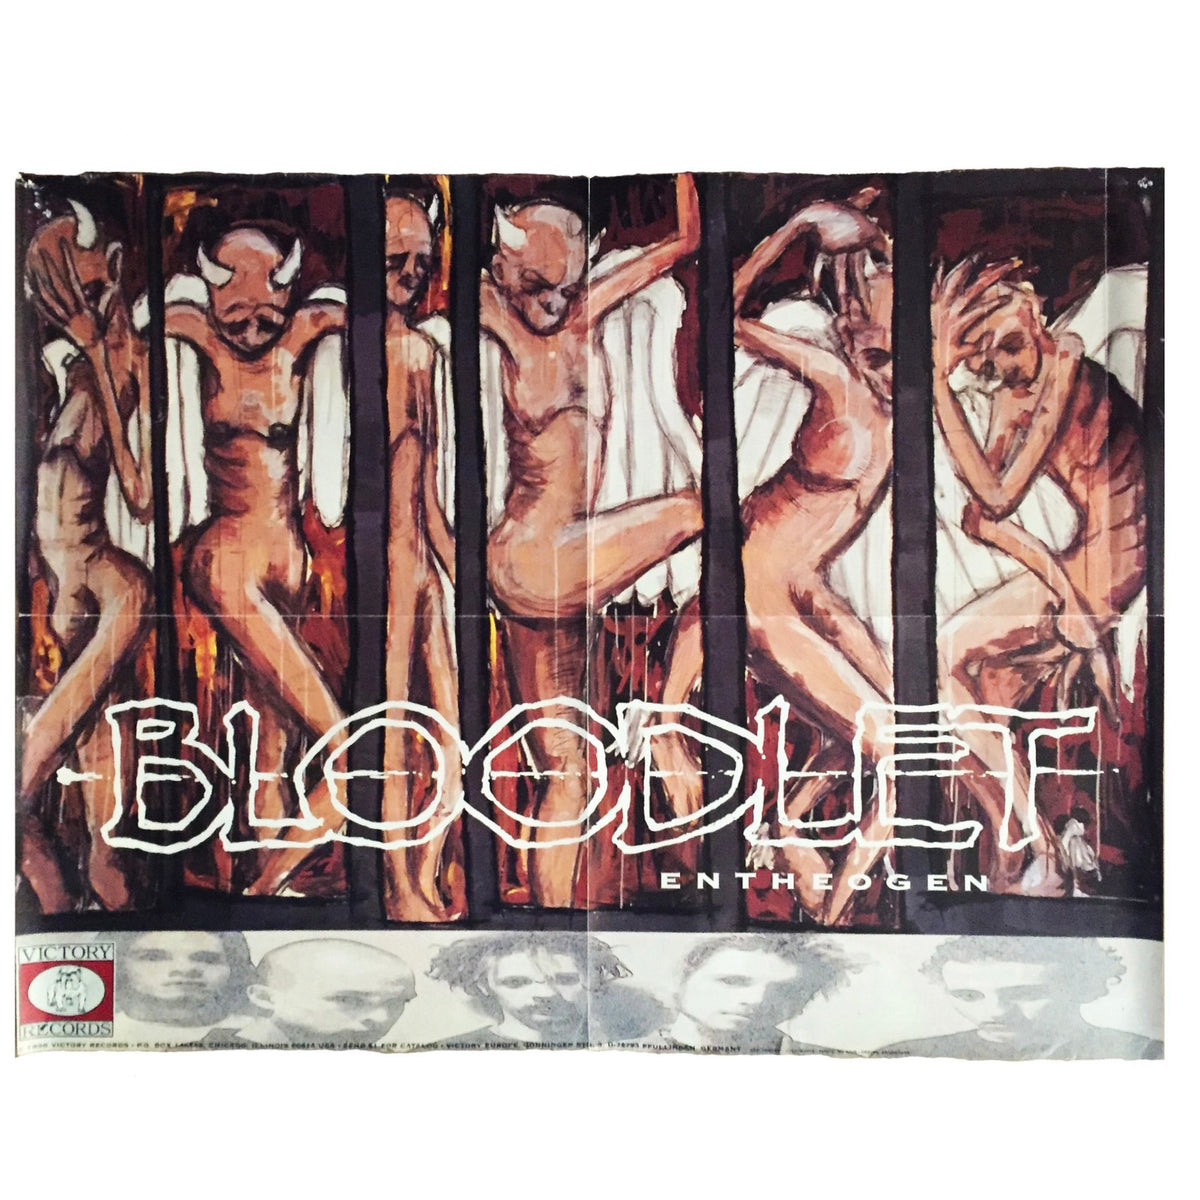 Vintage Bloodlet &quot;Entheogen&quot; Victory Records Promotional Poster